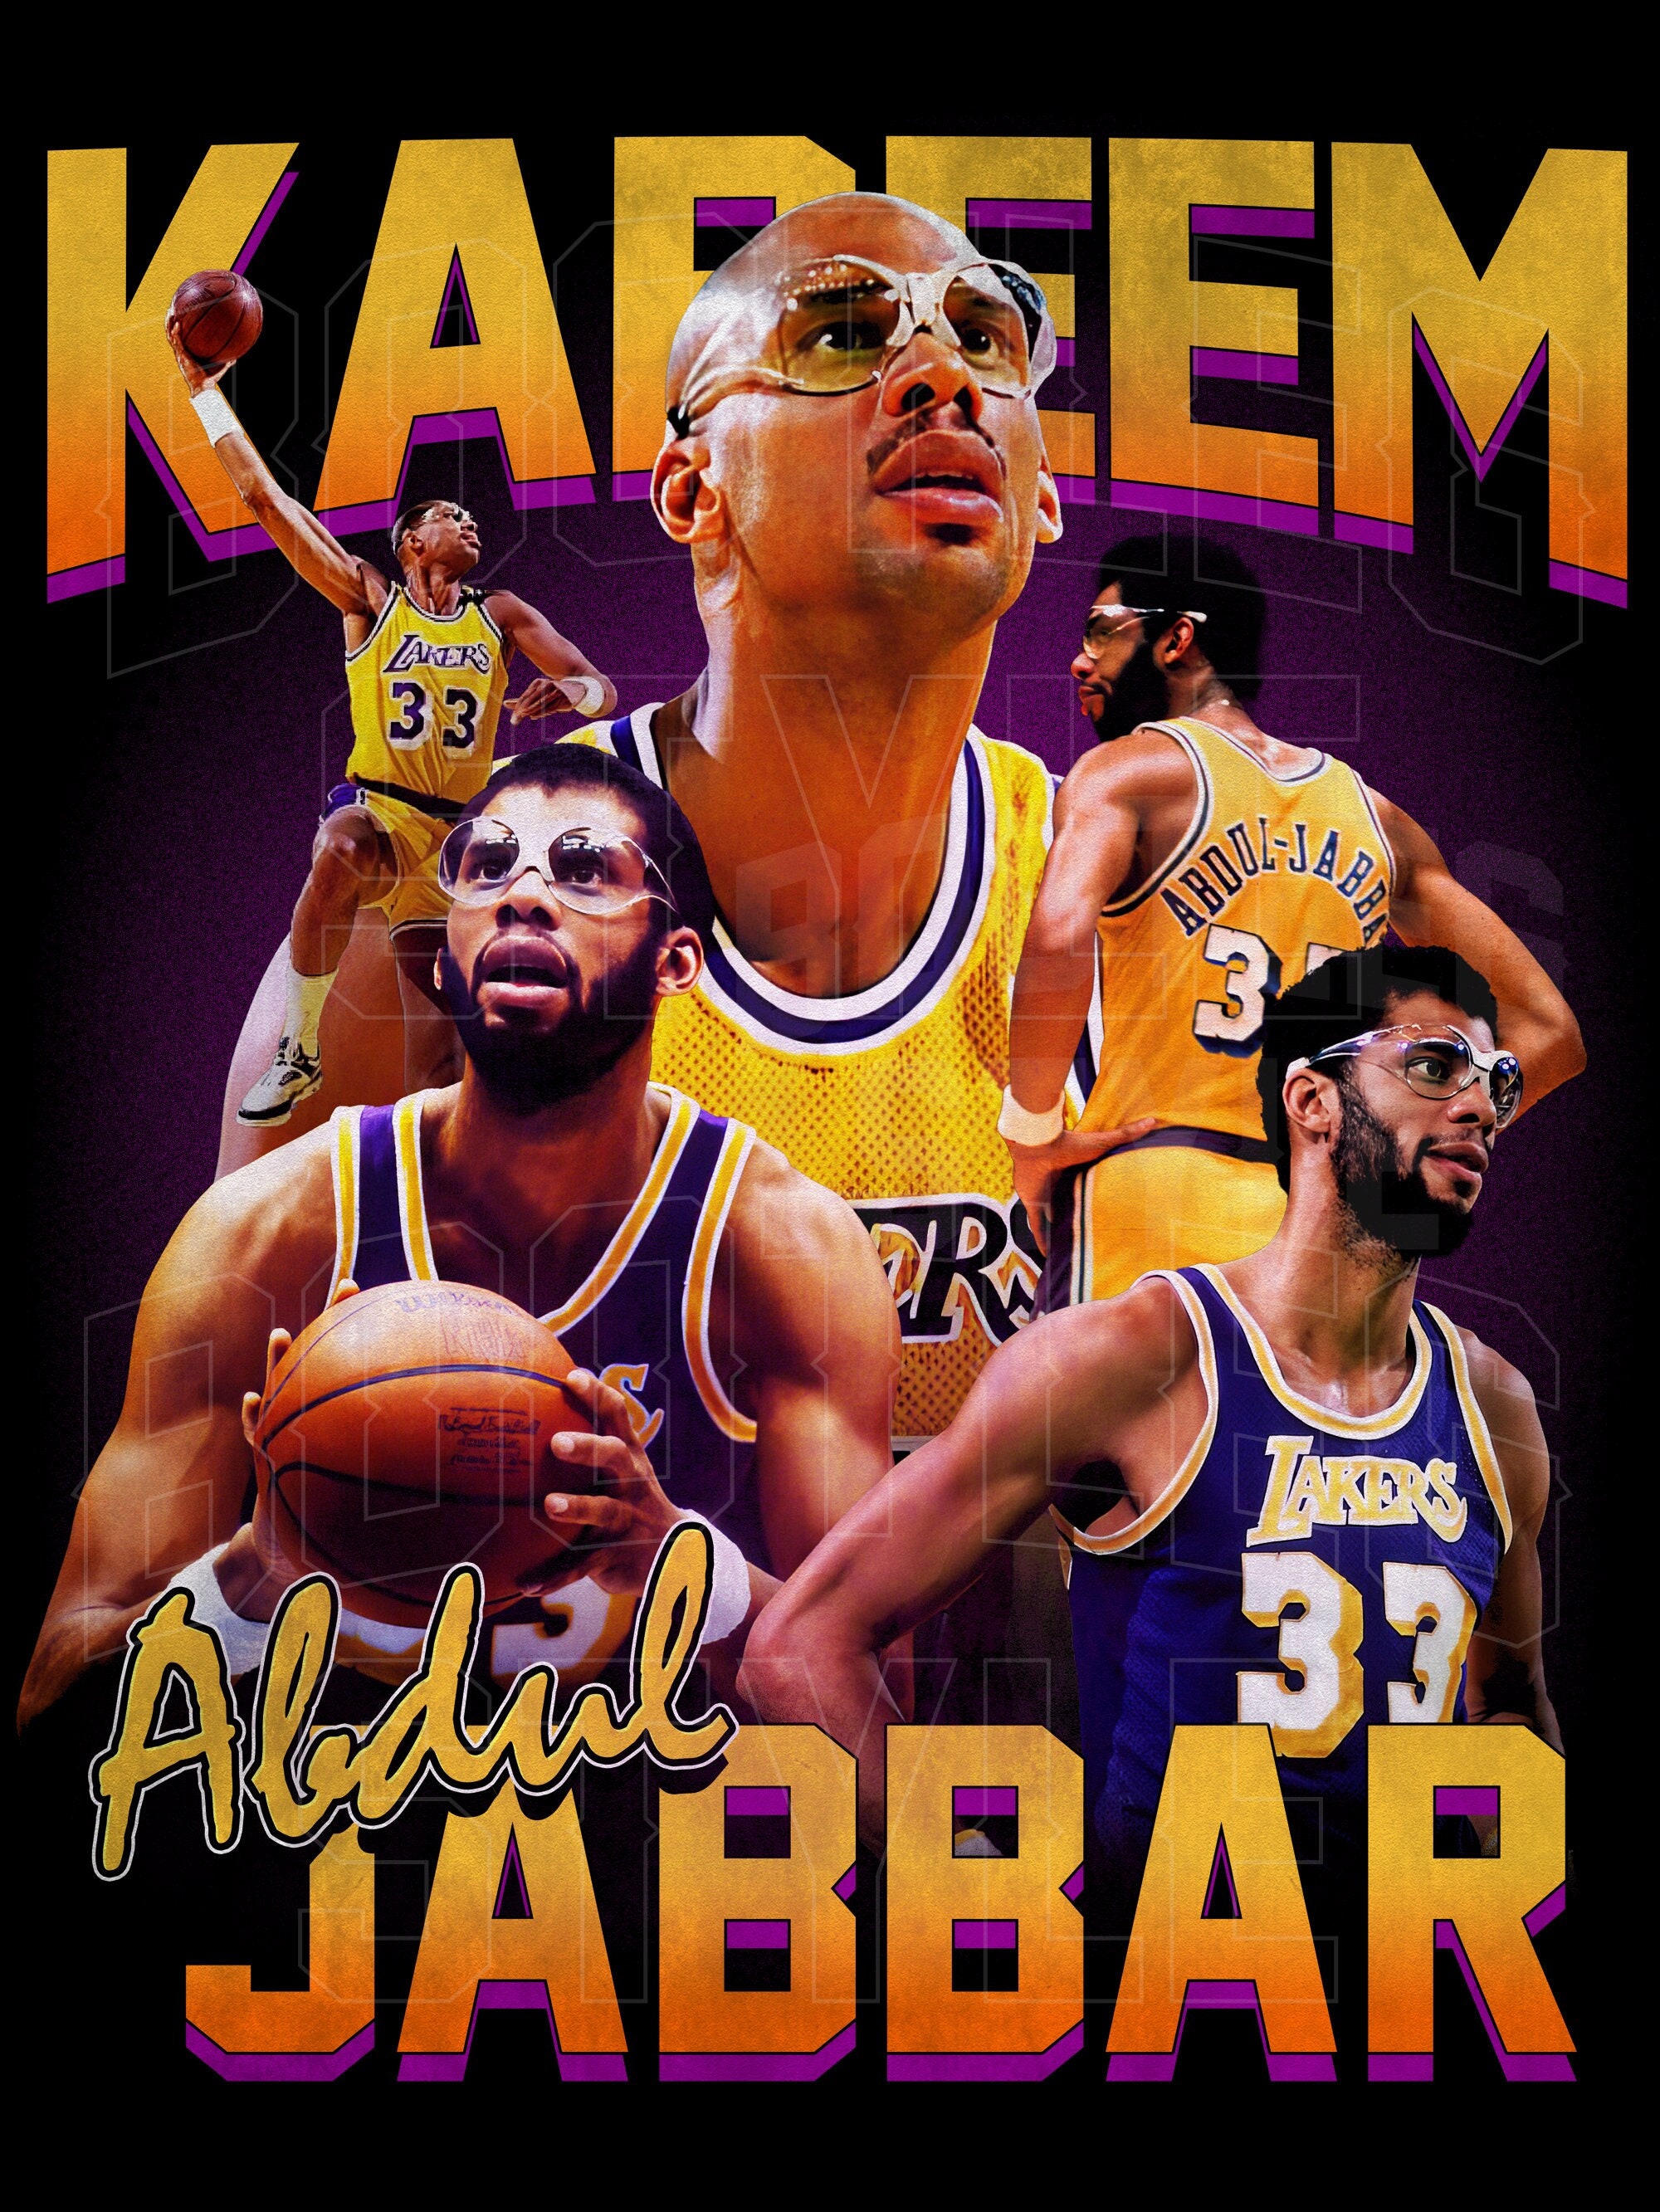  Lakers Los Angeles Legends Poster 36 x 24 Kareem, Shaq